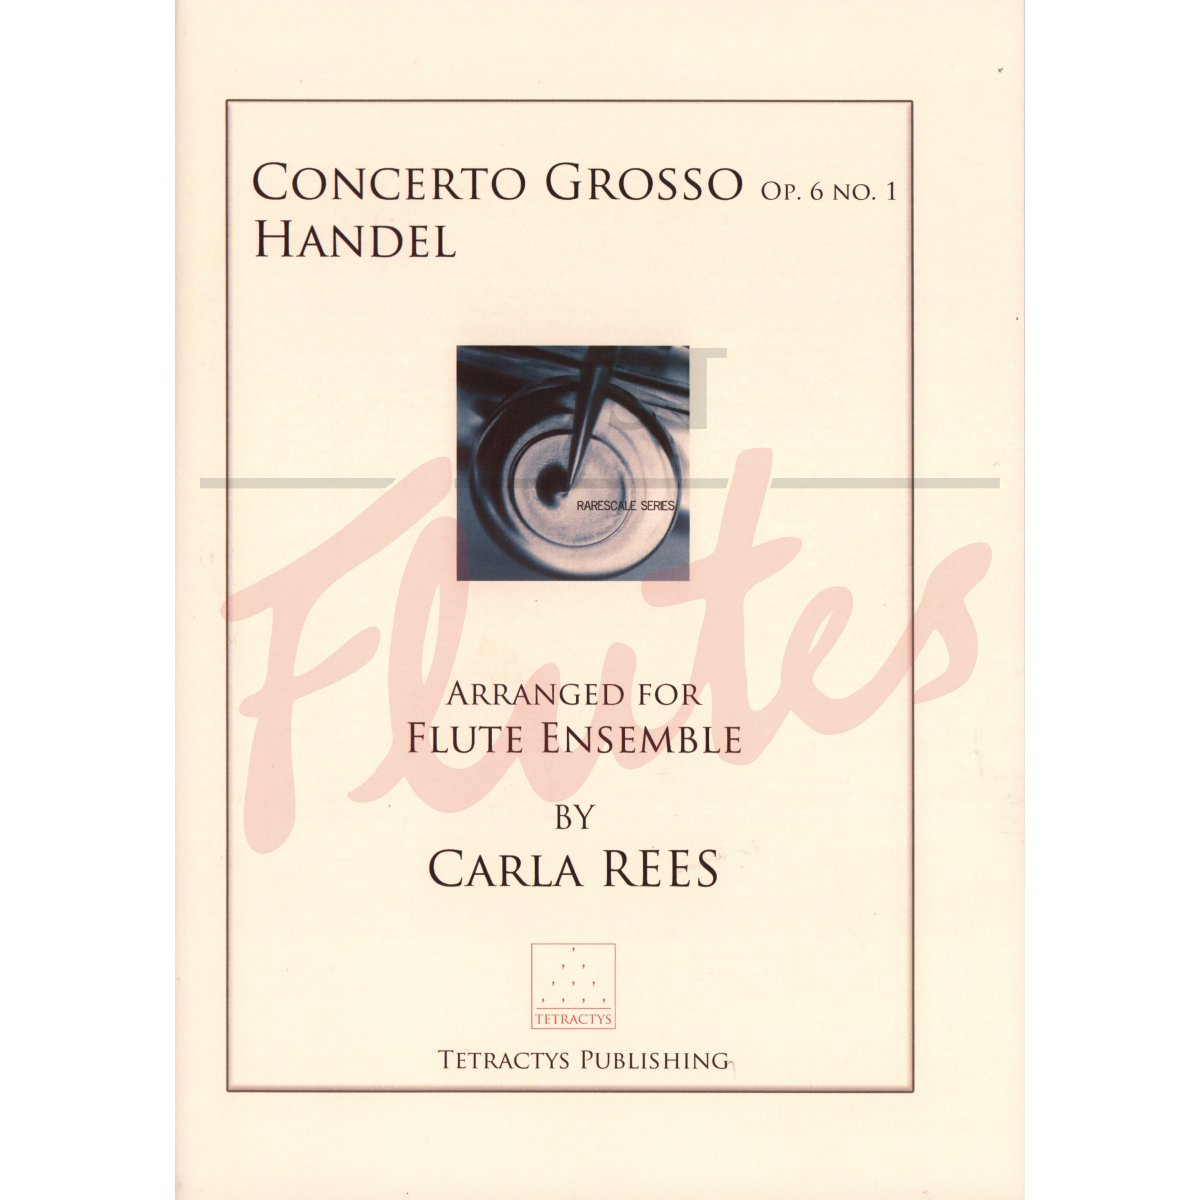 Concerto Grosso for Flute Ensemble